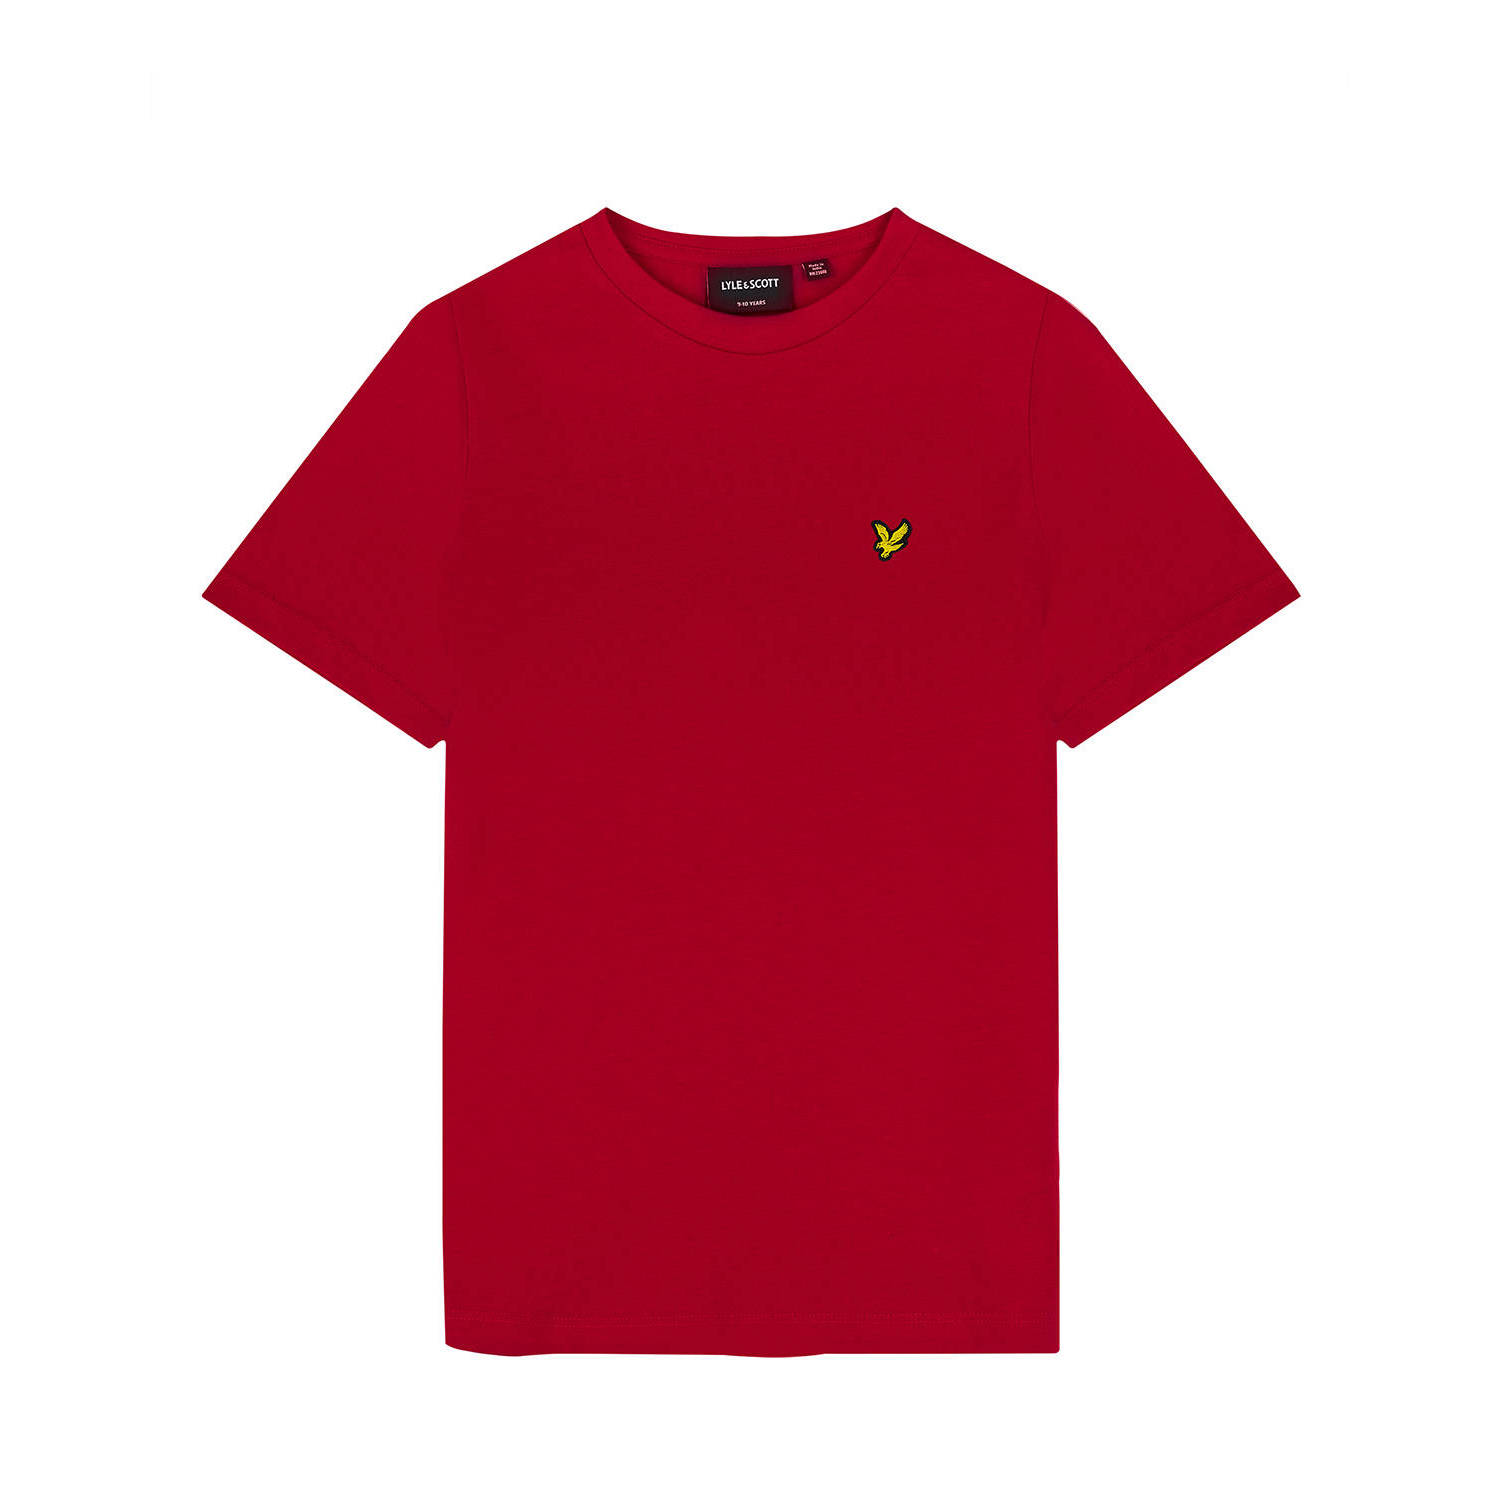 Lyle & Scott T-shirt TSB2000V rood